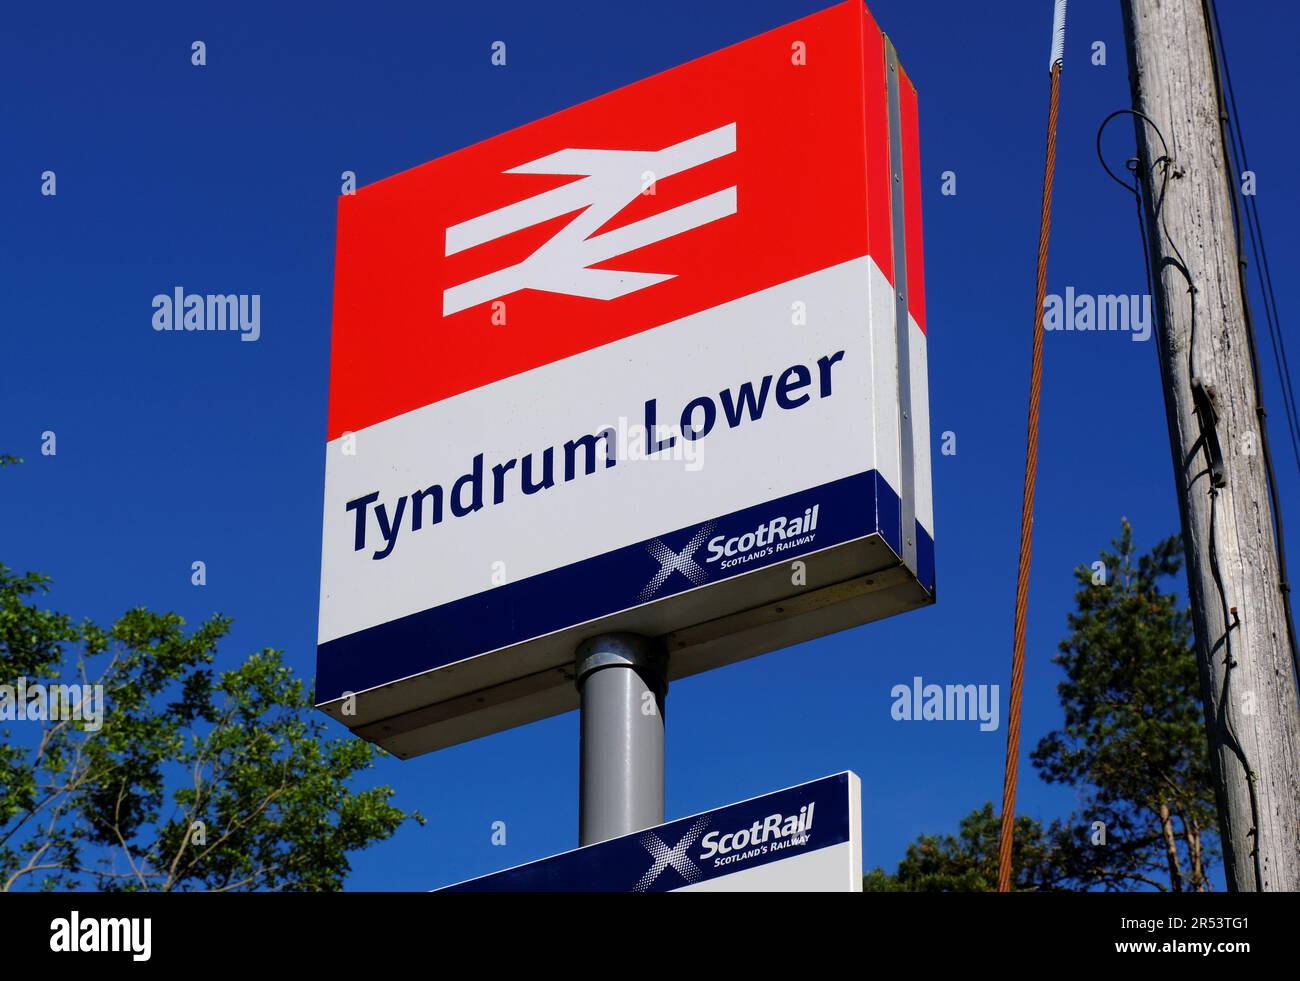 Tyndrum Lower railway station sign, Tyndrum Scotland Stock Photo